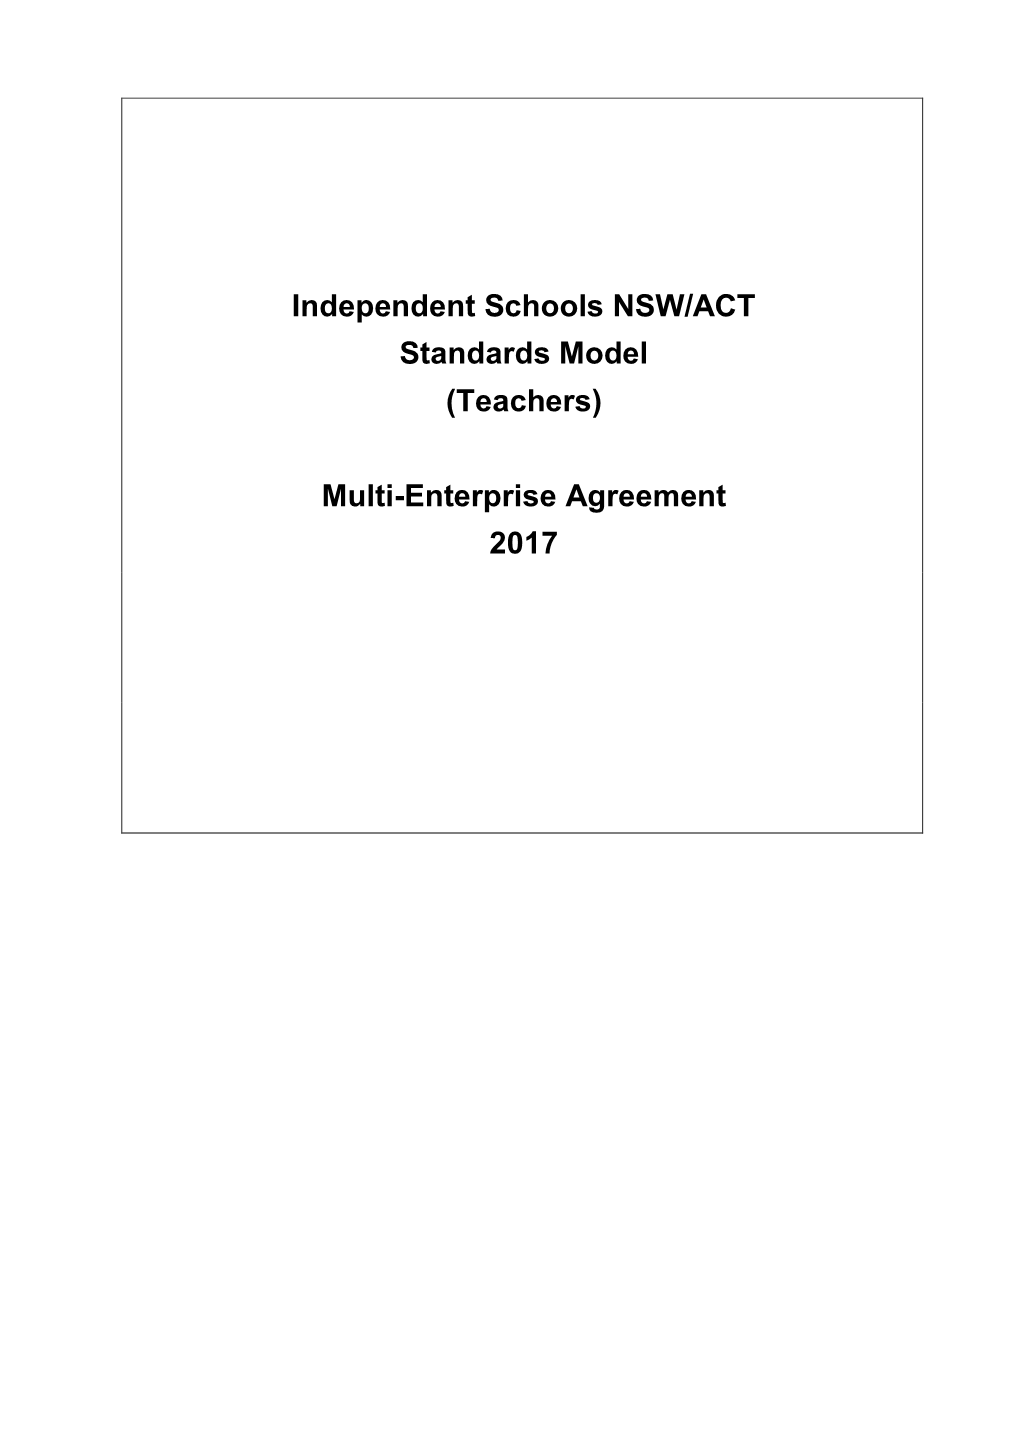 Independent Schools NSW/ACT Standards Model (Teachers) Multi-Enterprise Agreement 2017